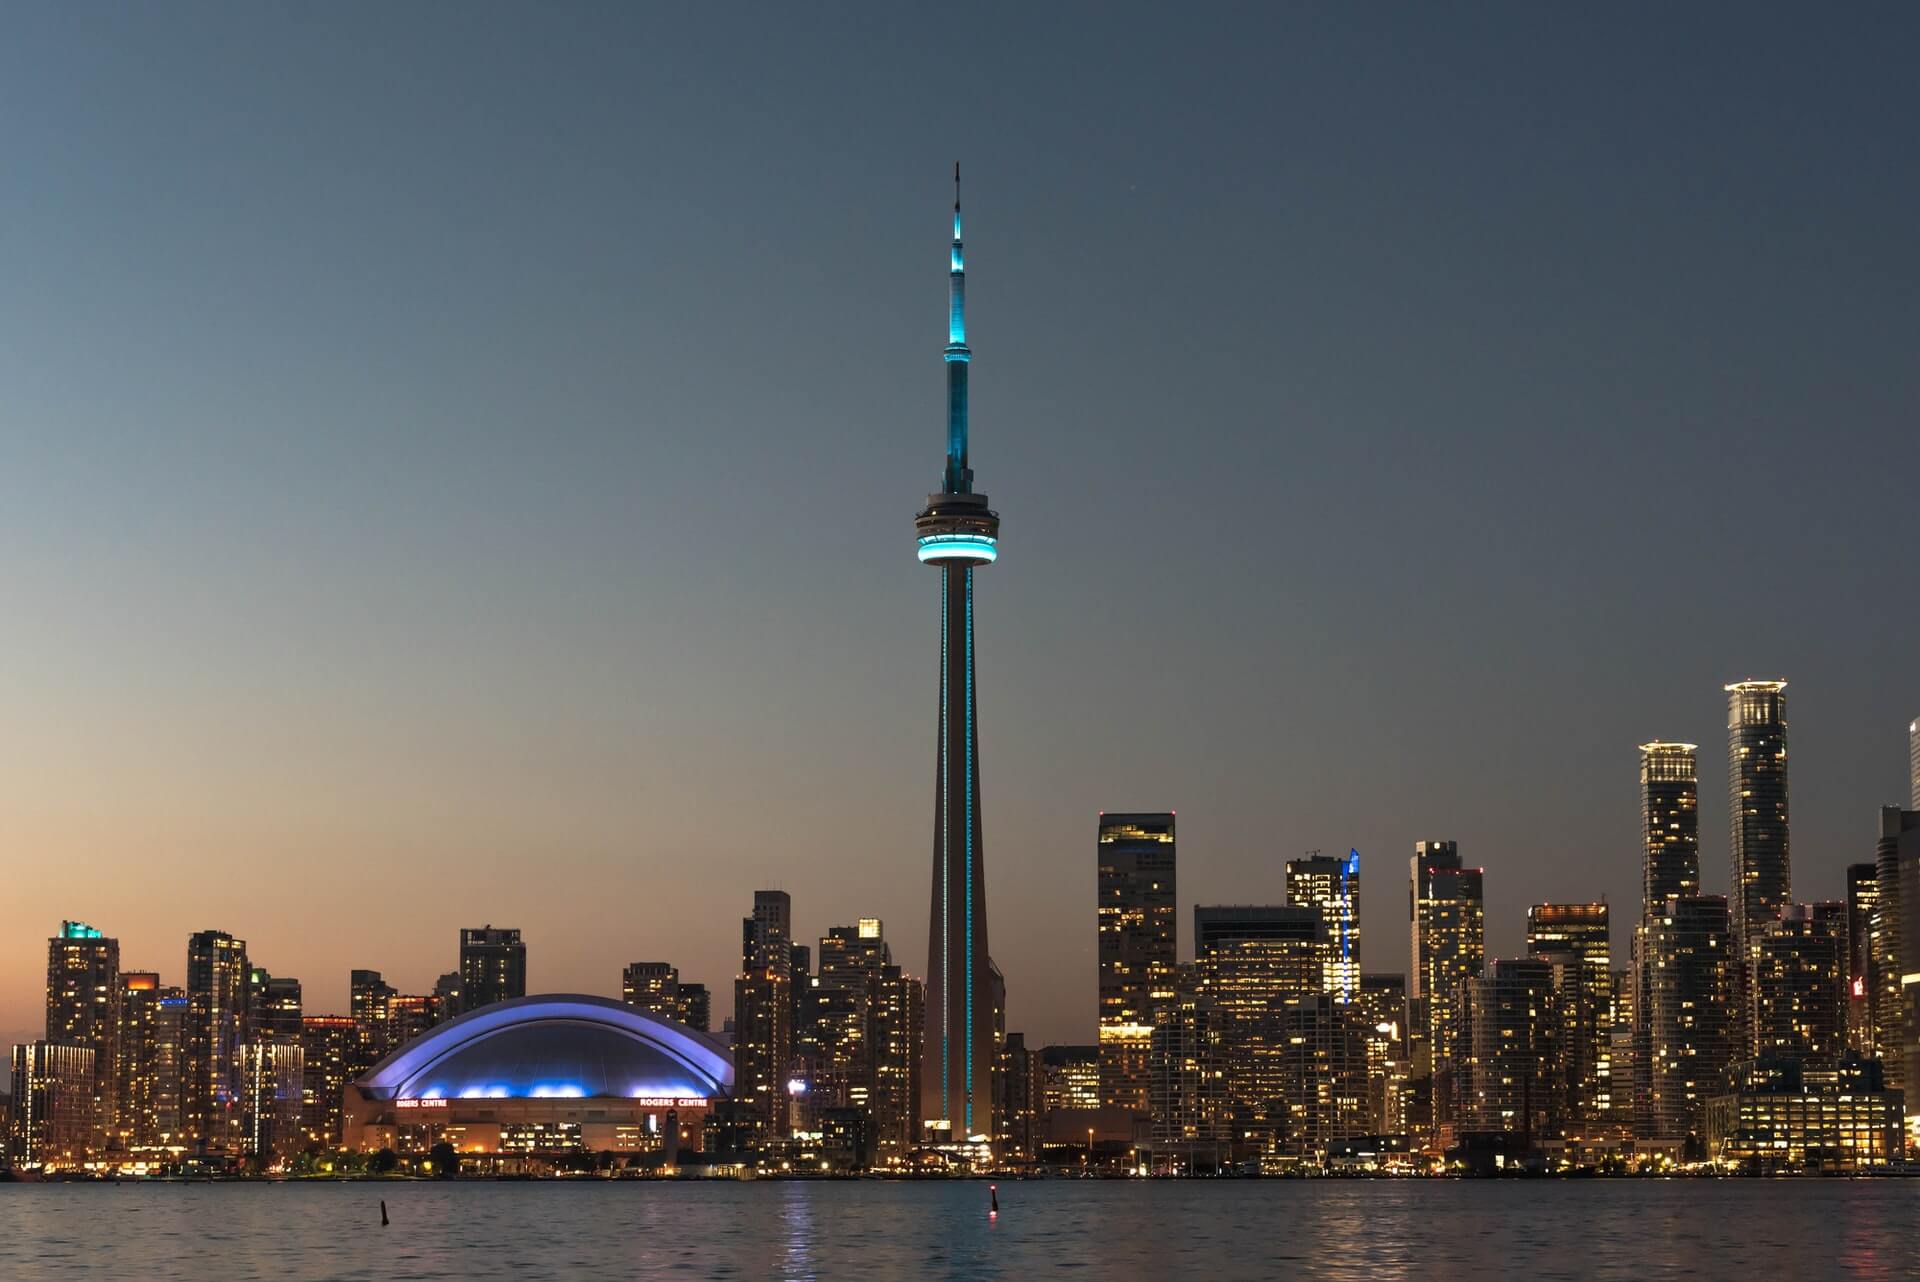 Toronto, Ontario, Canada skyline viewed from harbor at dusk